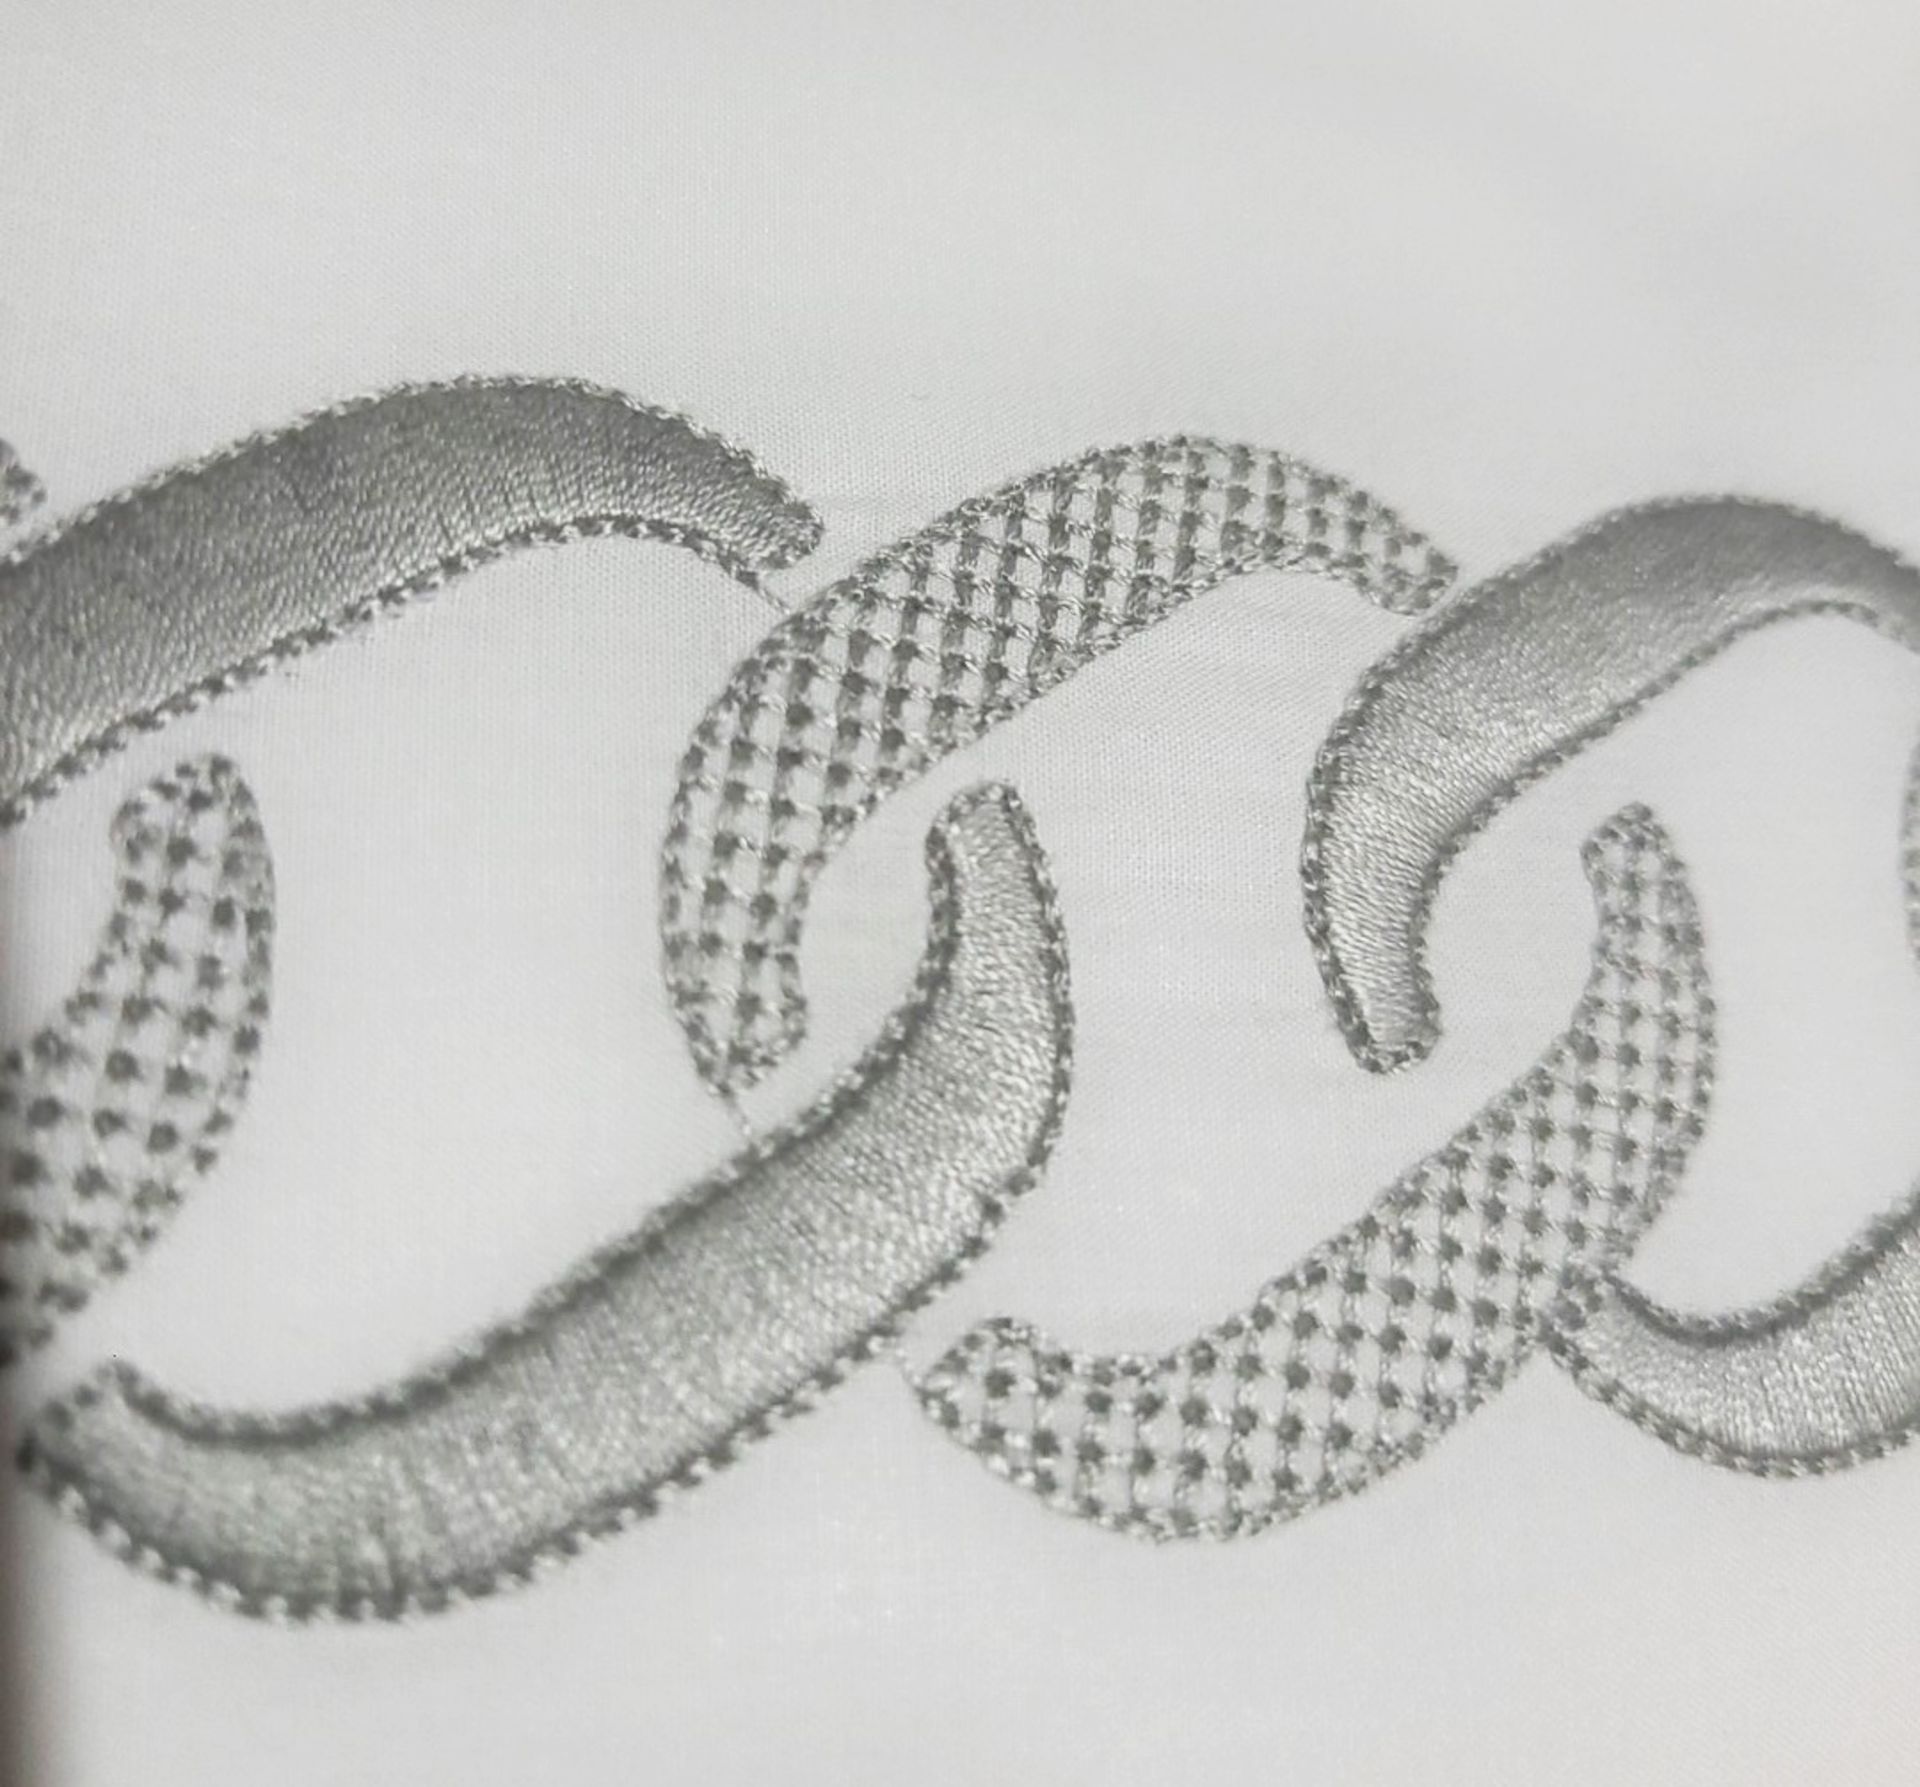 1 x PRATESI Treccia Forever Silver Embroidered Angel Skin Duvet 230x220cm - Image 2 of 3